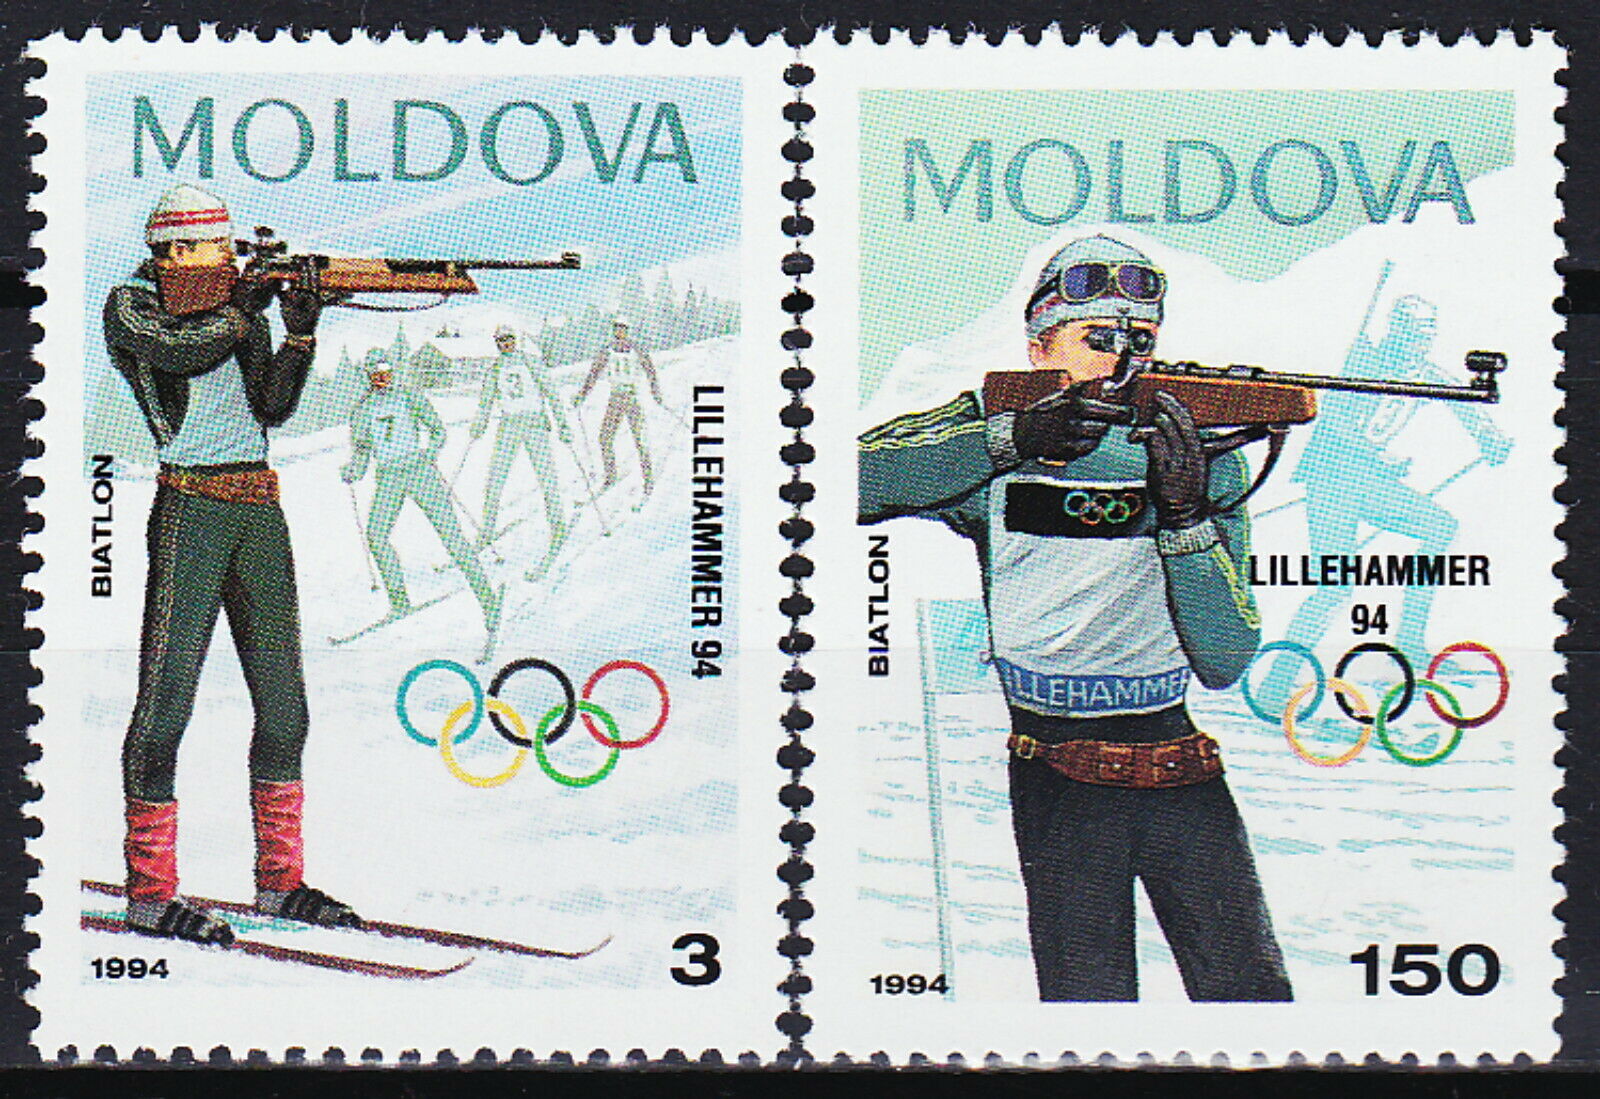 Moldova Olympic Games Lillehammer 1994 MNH-3,95 Euro